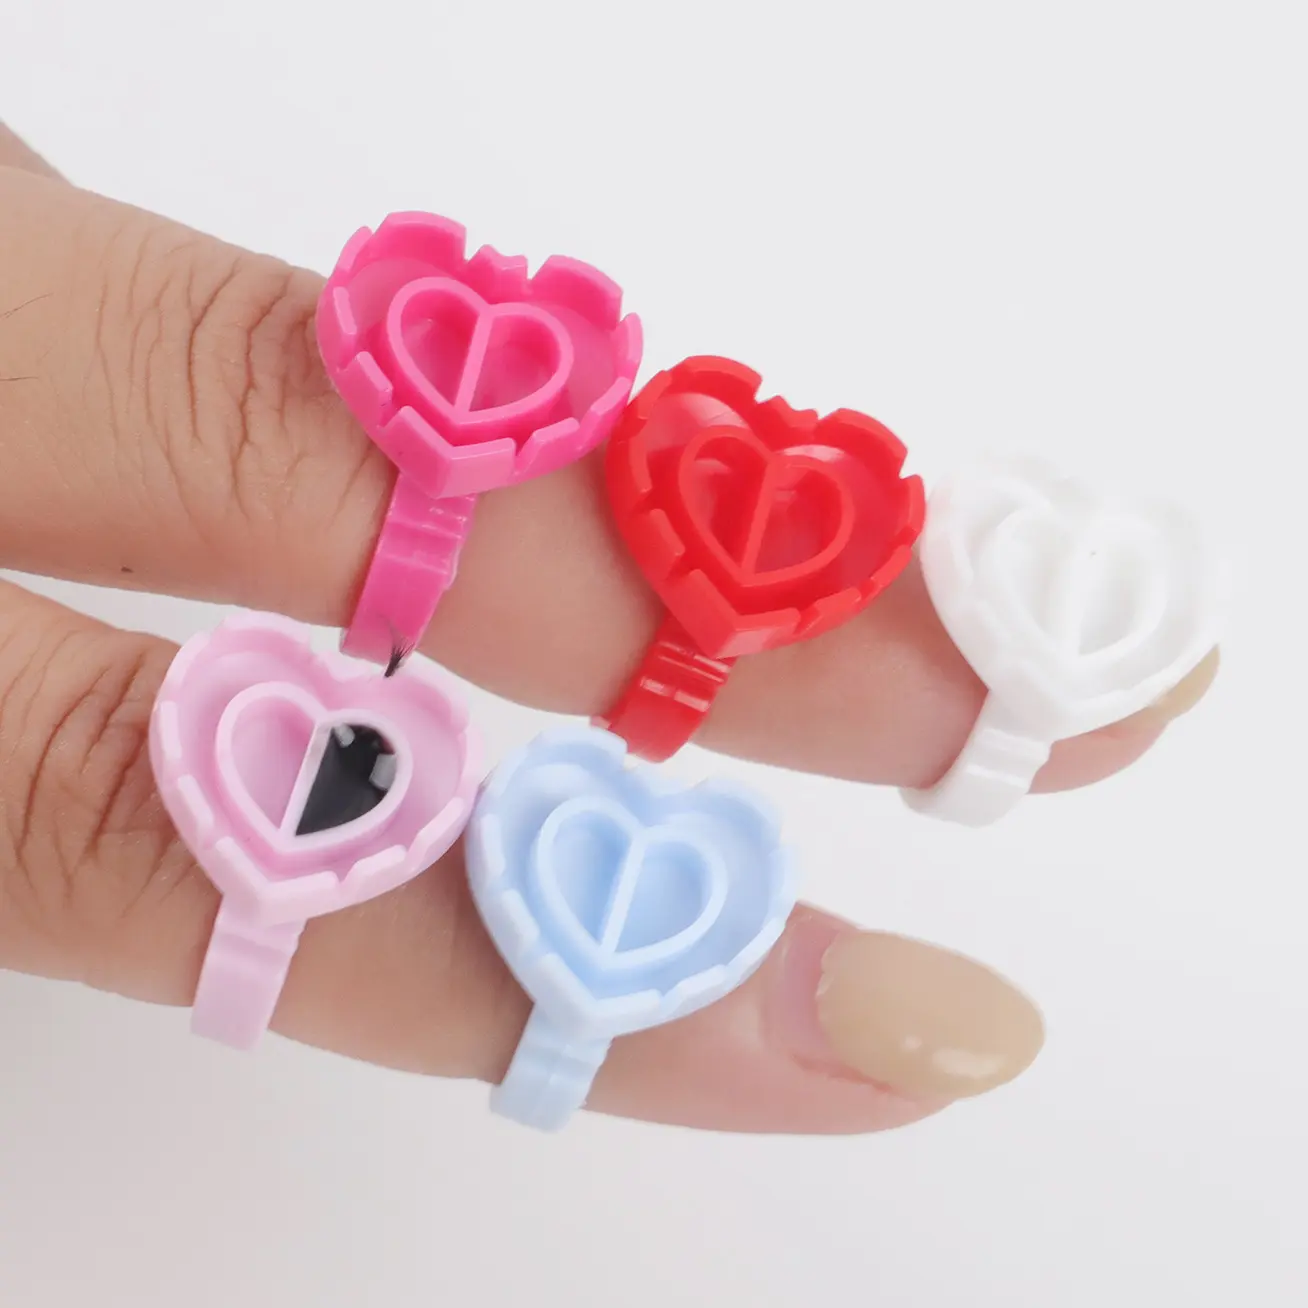 Plásticos desechables de etiqueta privada, anillo de pegamento de oro blanco, azul, rosa, soporte de pegamento para pestañas, anillos de pegamento de copa floreciente